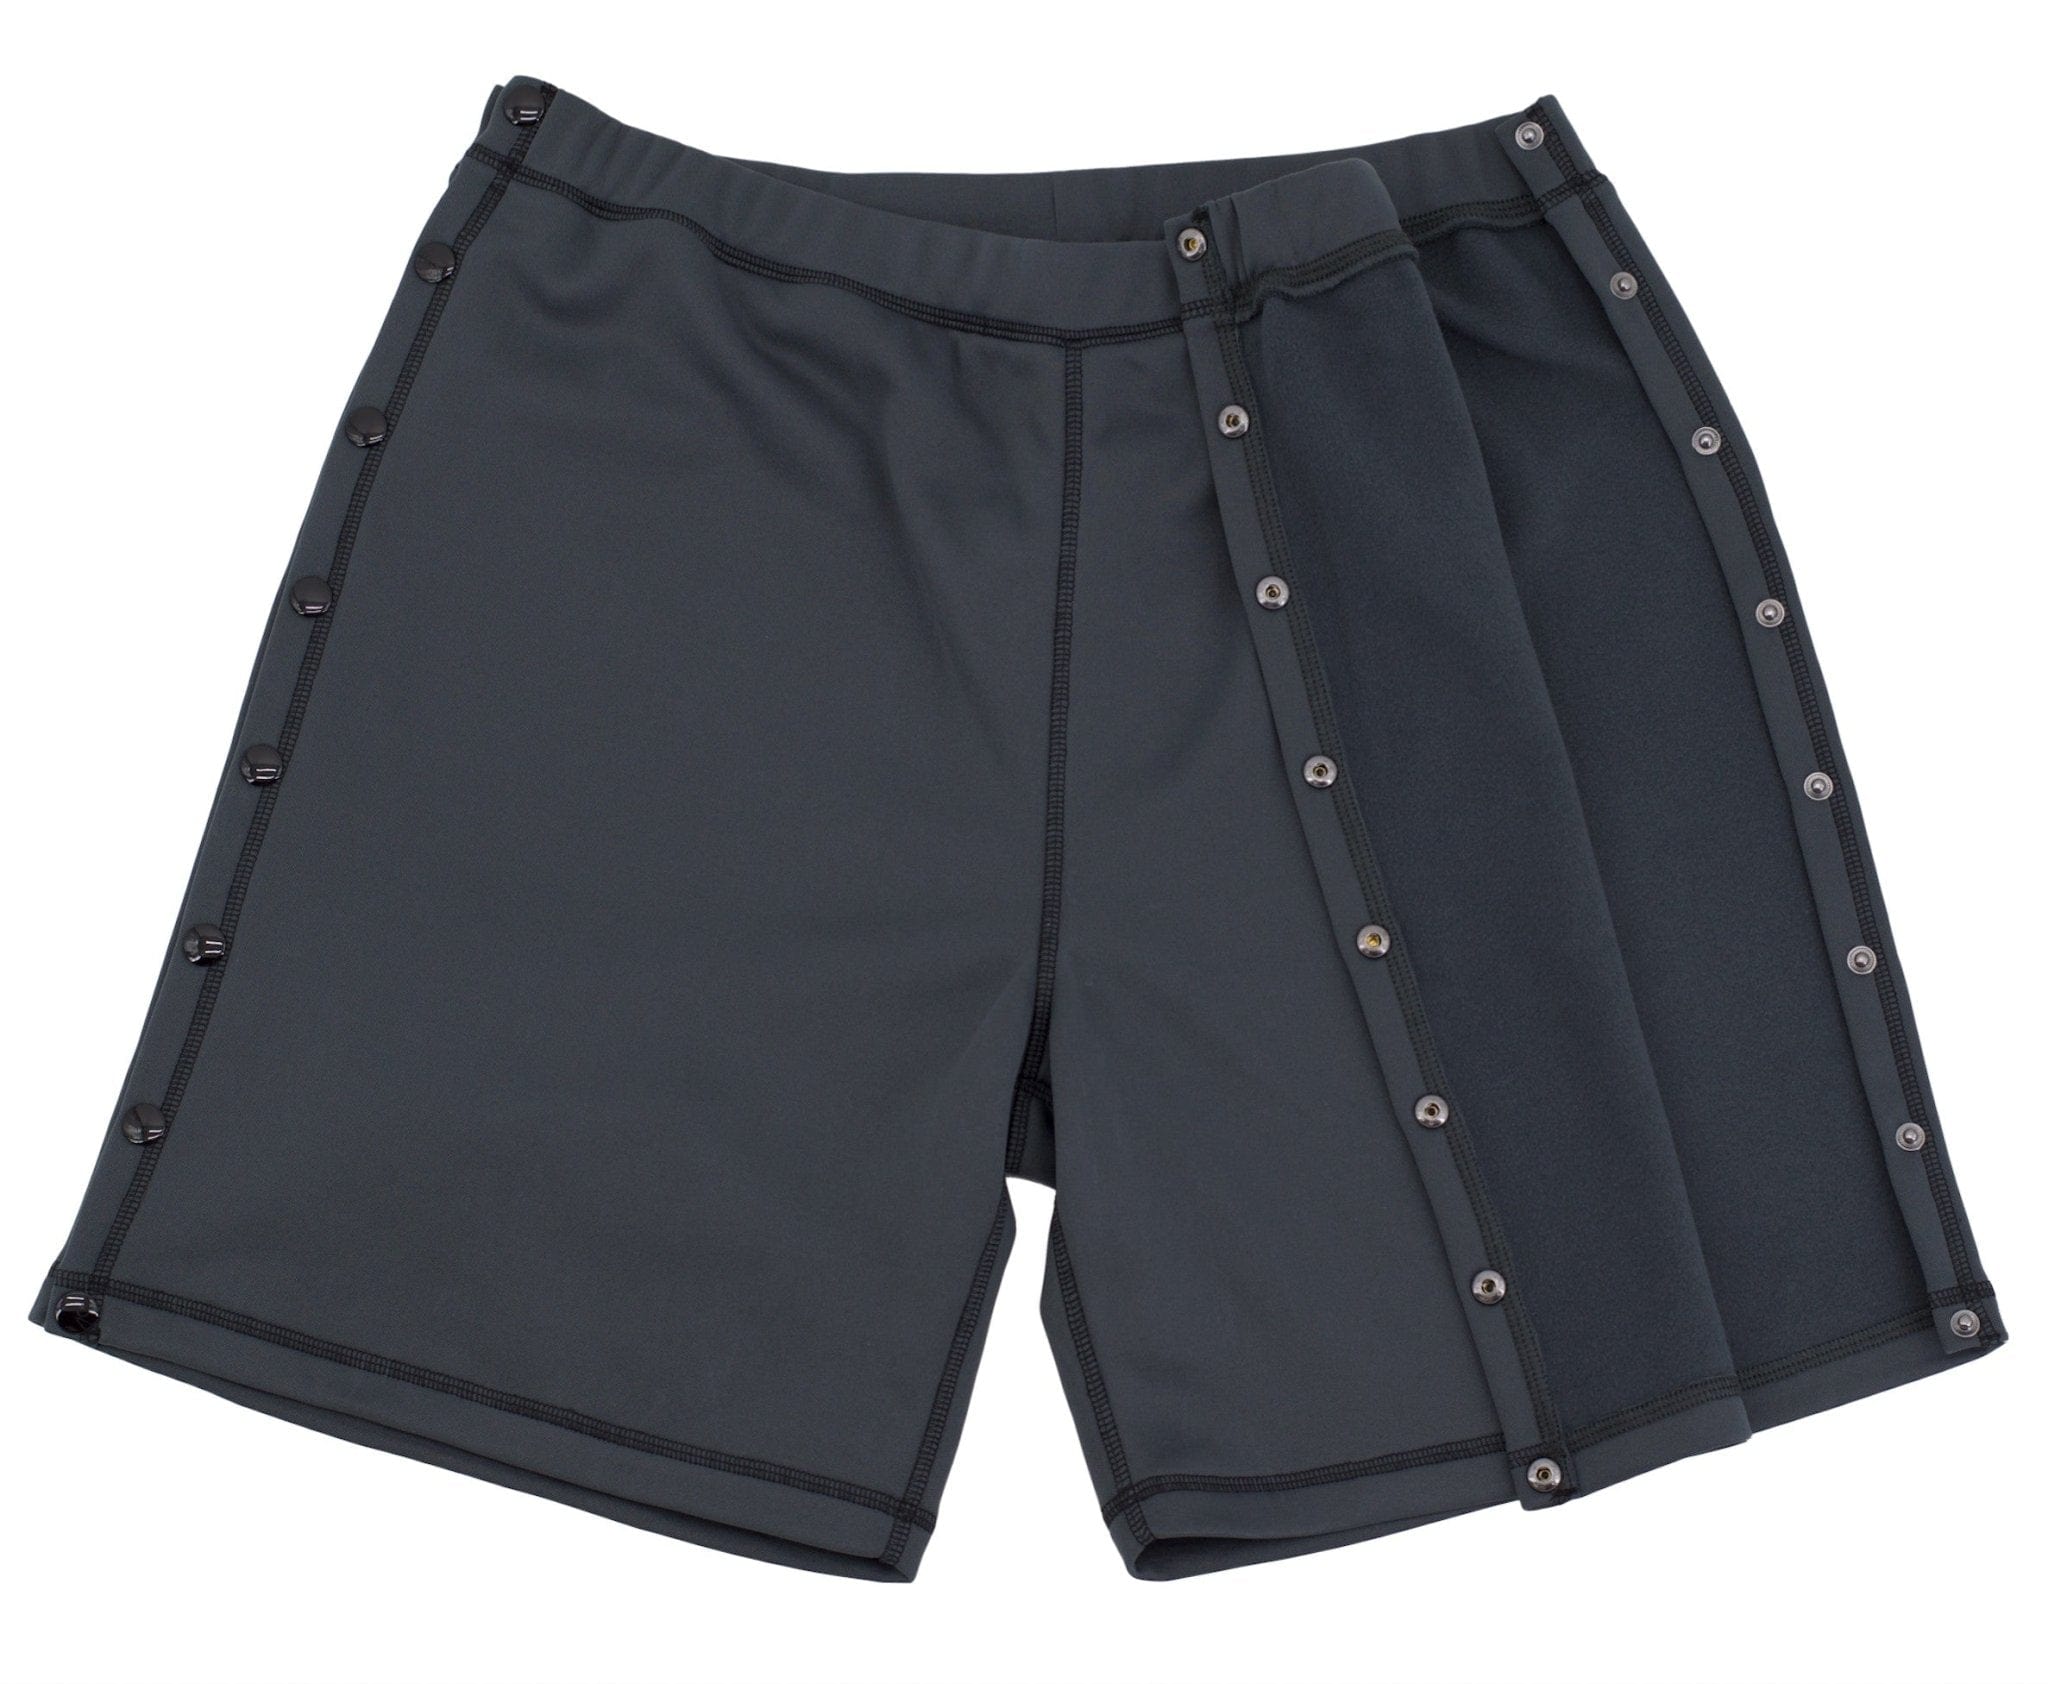 Post Surgery Tearaway Shorts - Men's - Women's - Unisex Sizing Renova Medical Wear